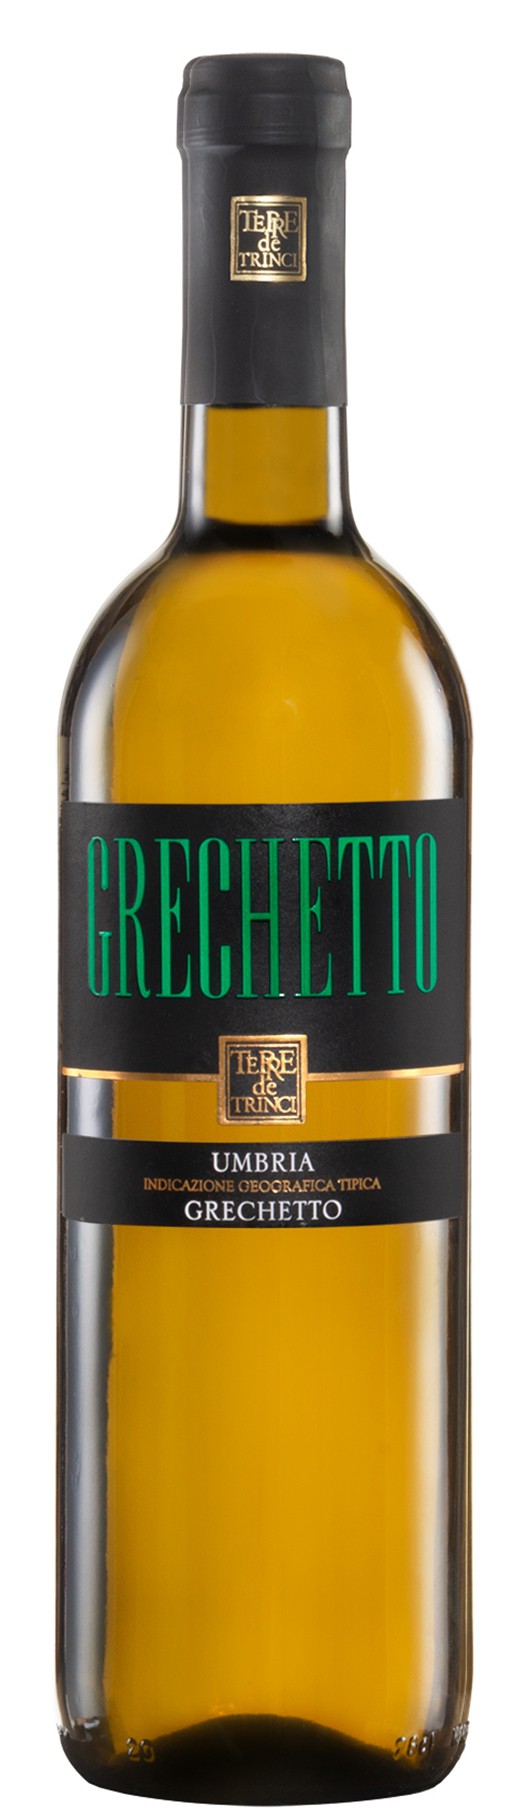 Umbria IGT Grechetto 